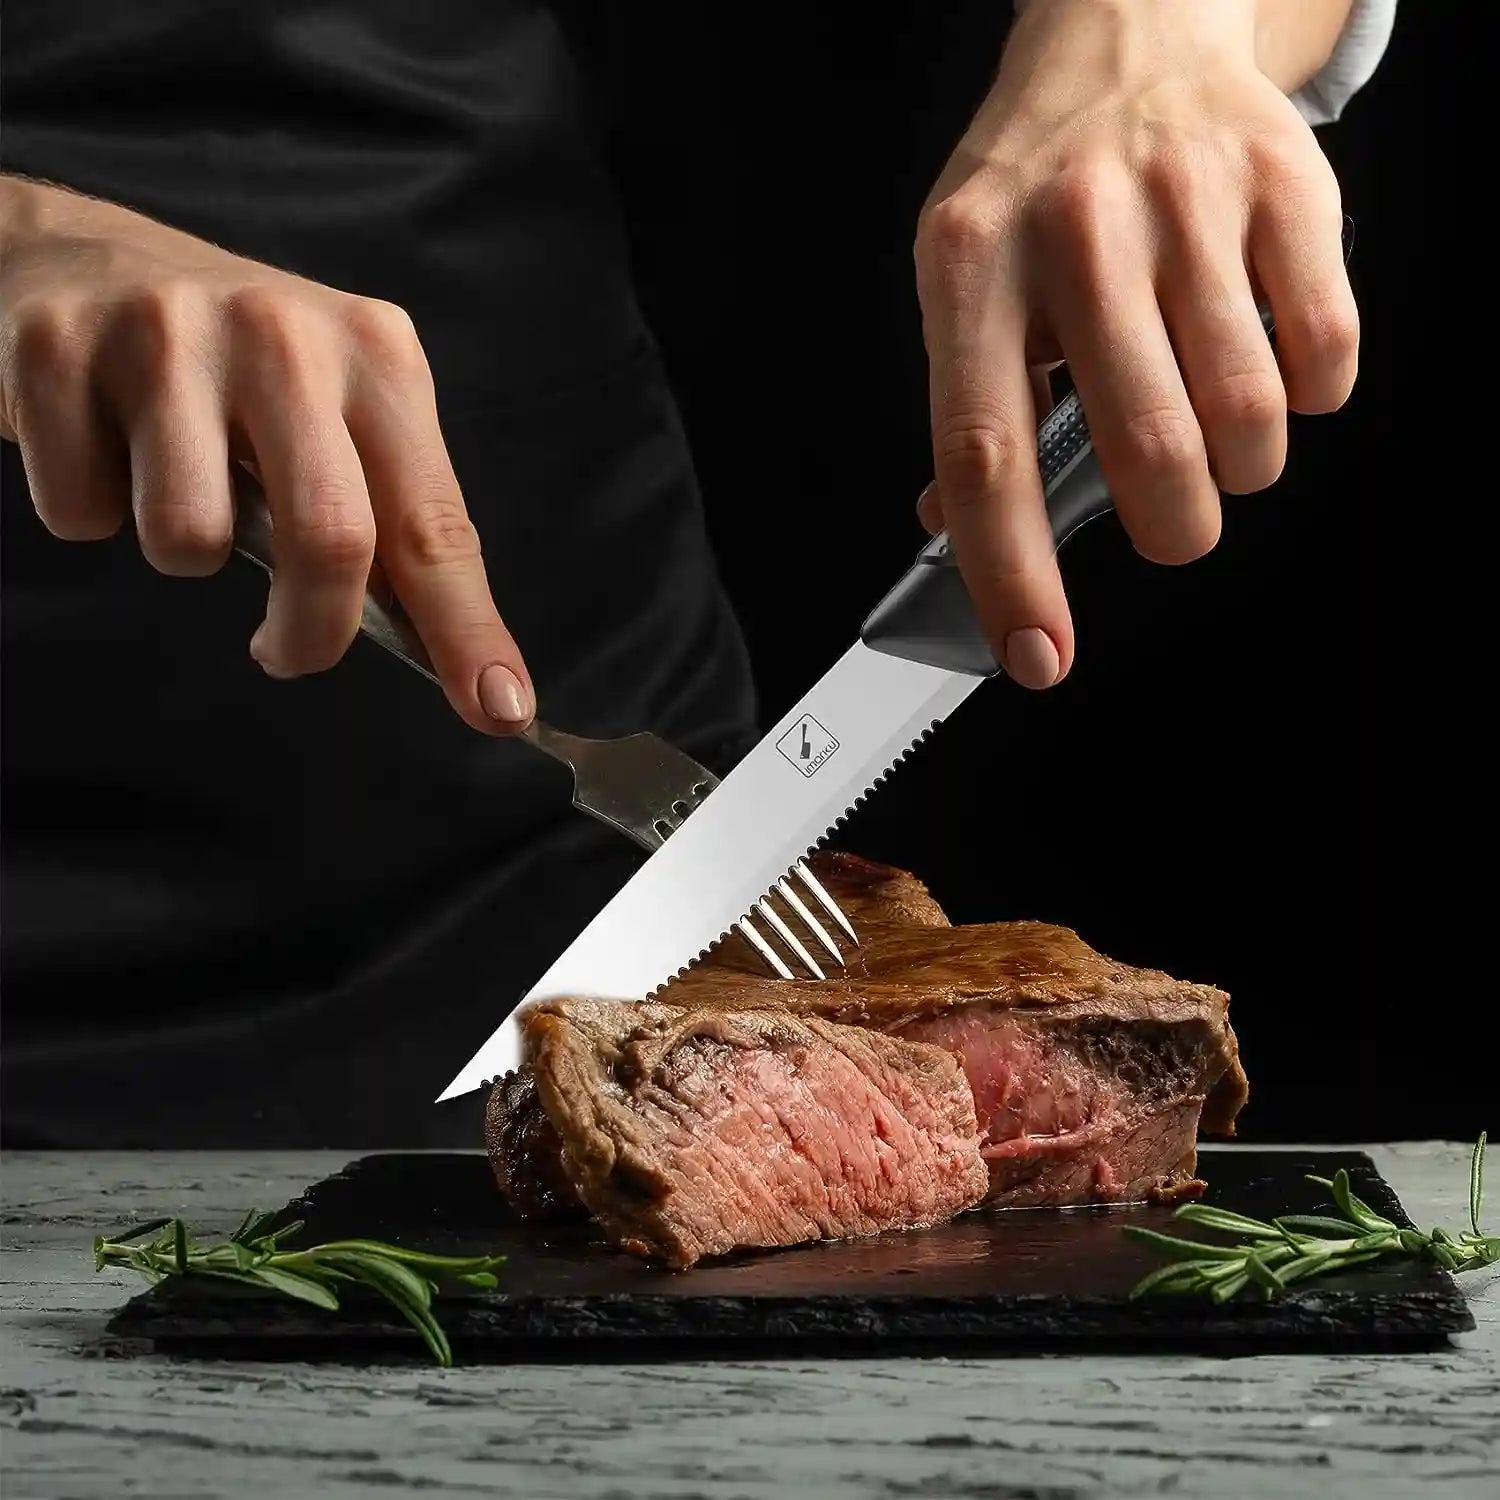 imarku 6-Piece 5 inch German Serrated Steak Knives Set